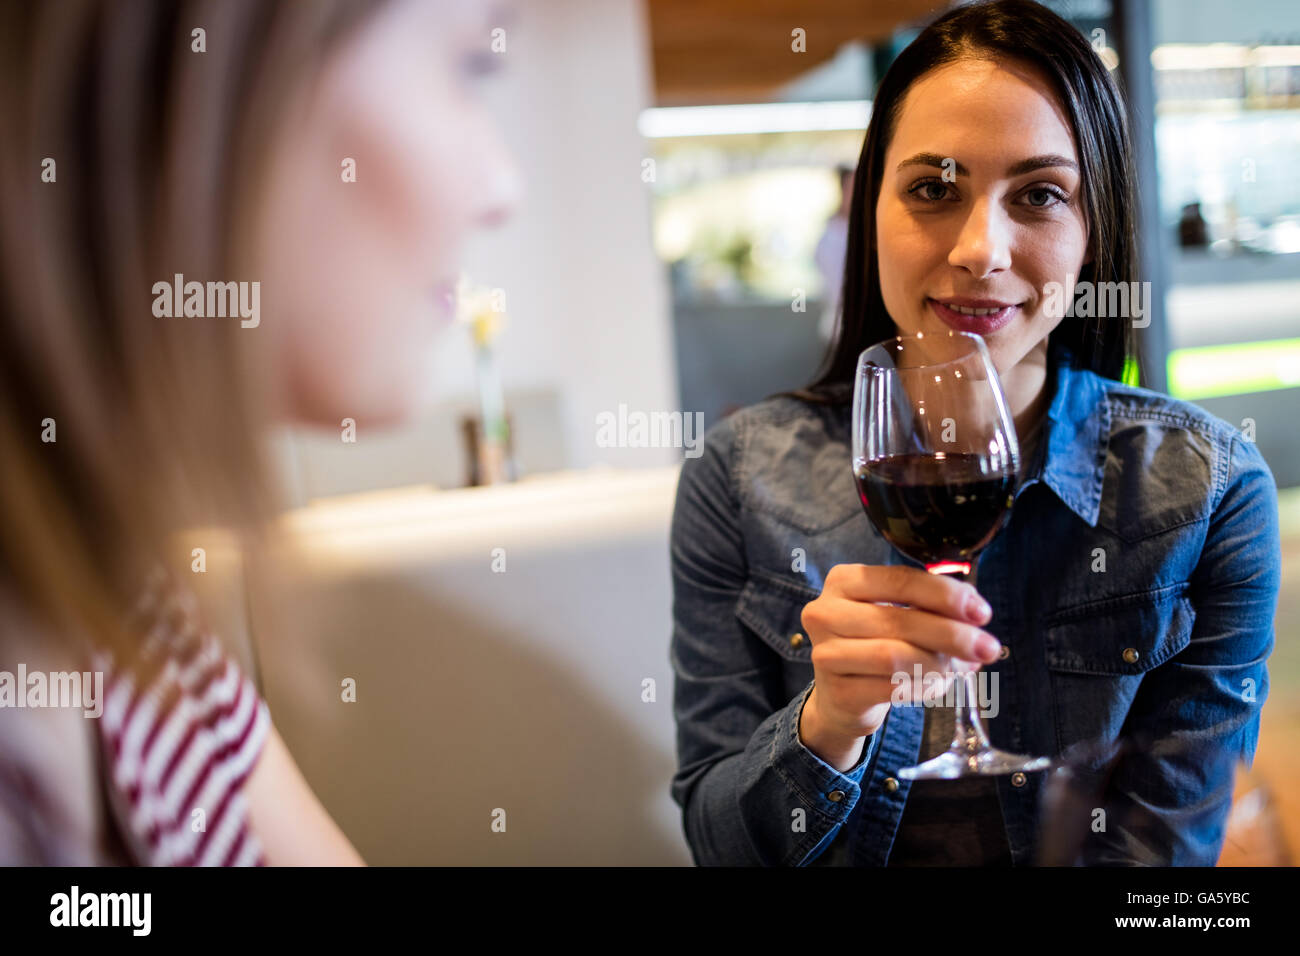 Beautiful woman drinking wine with friend Stock Photo